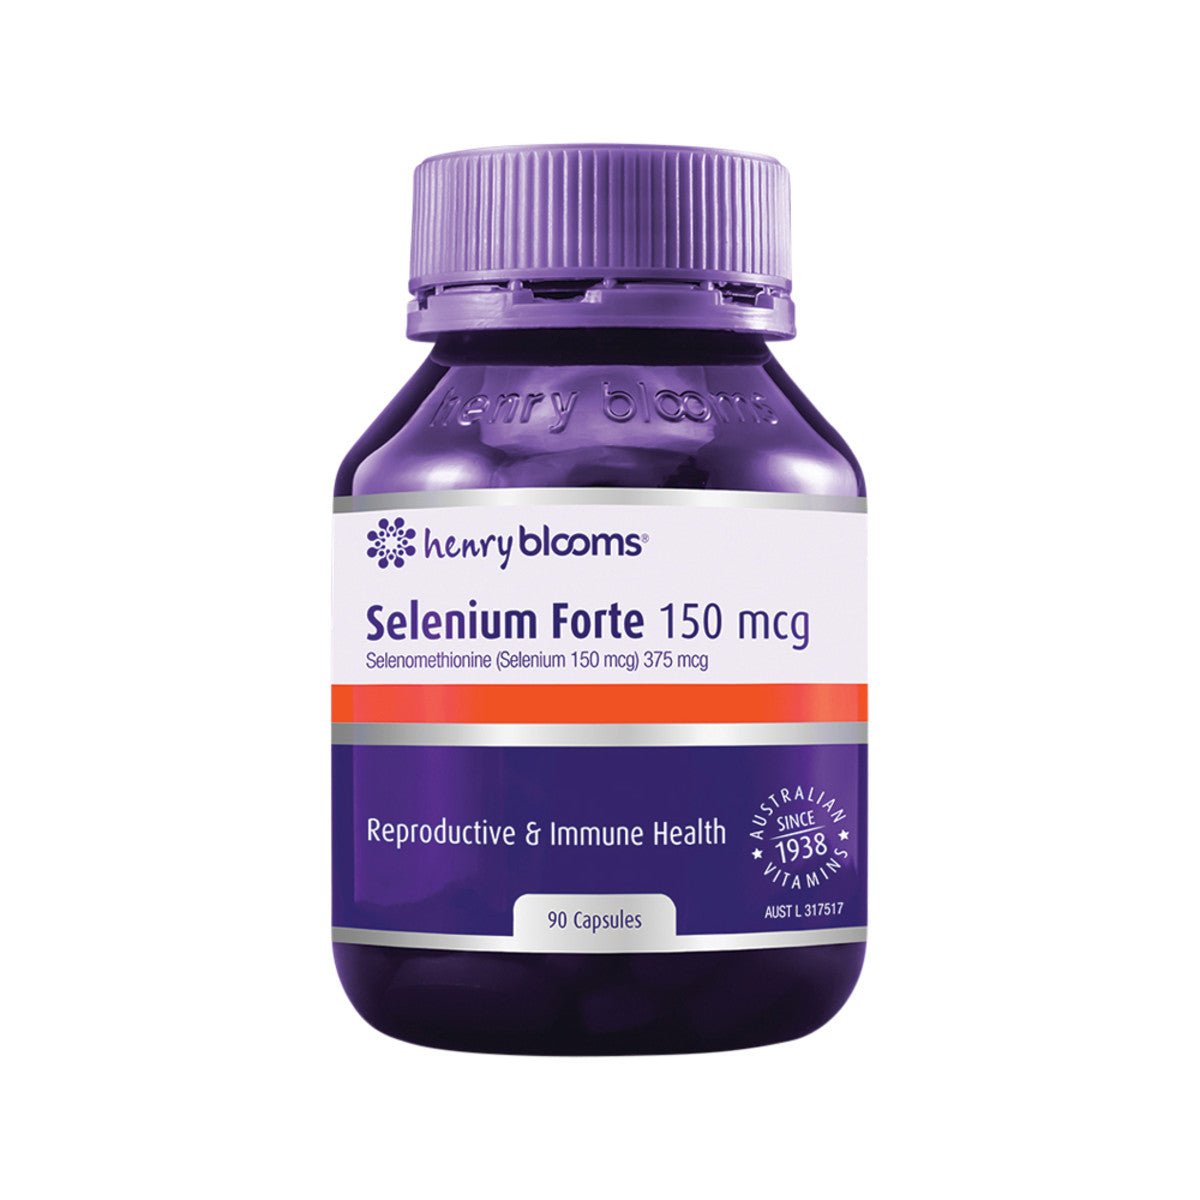 Henry Blooms - Selenium Forte 150mcg